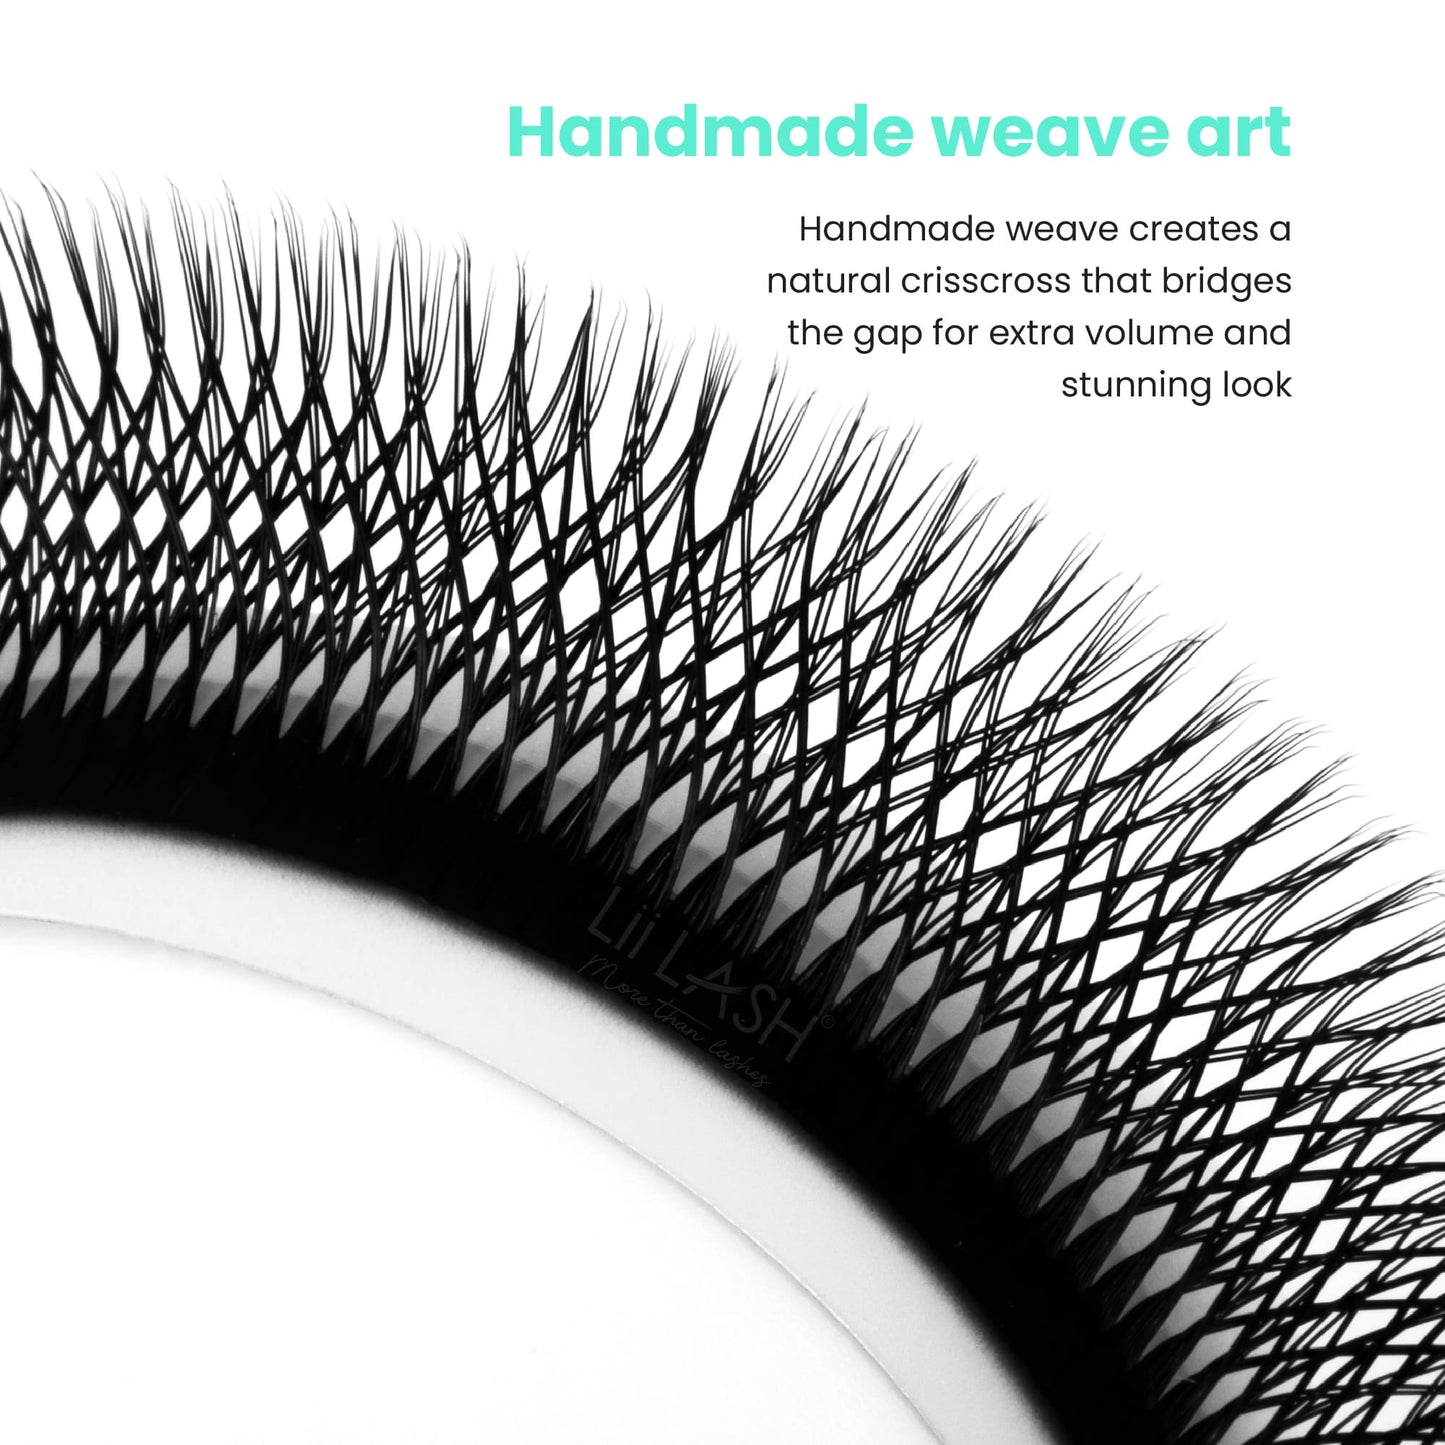 5D-Wispy-W-eyelashes-handmade-weave-art